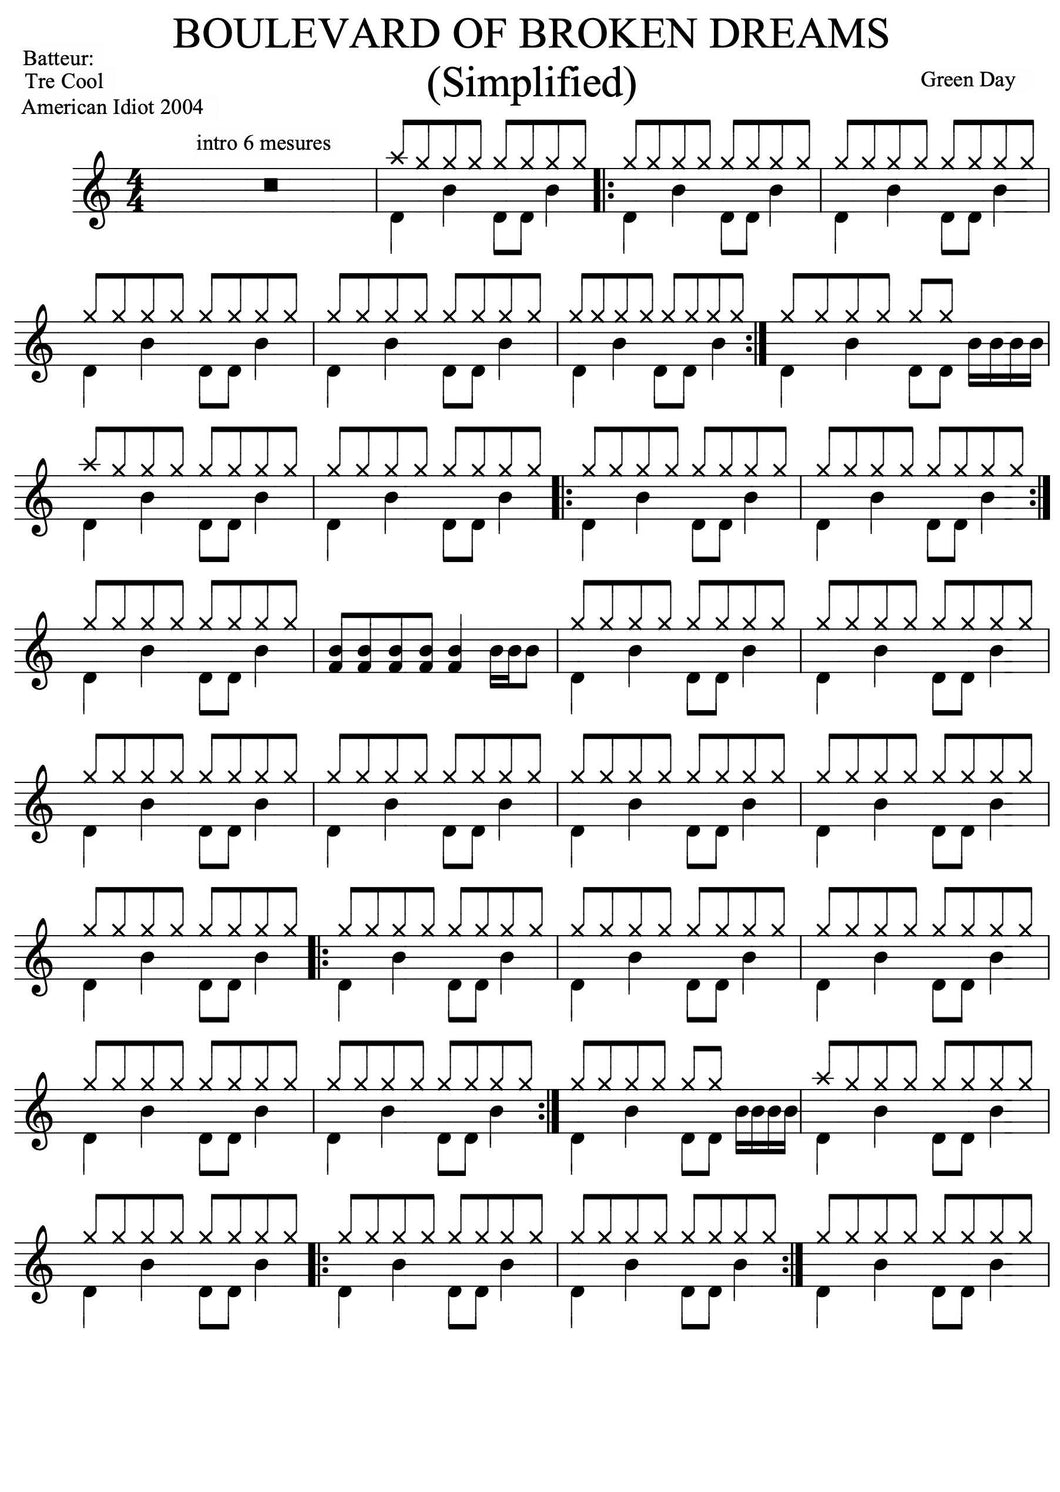 Boulevard of Broken Dreams - Green Day - Simplified Drum Transcription / Drum Sheet Music - Rossoni